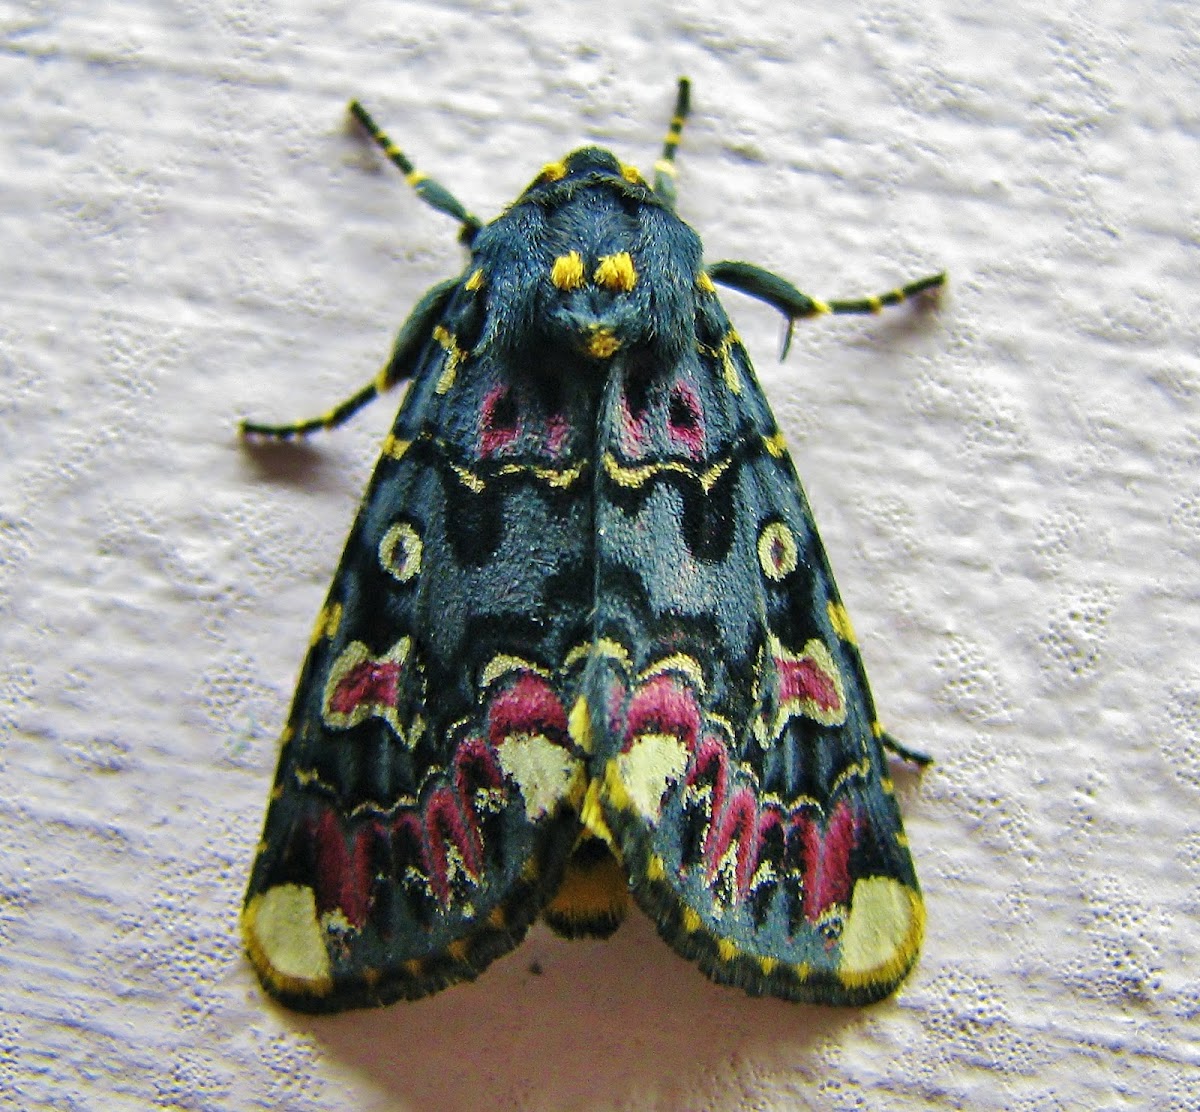 Lily moth